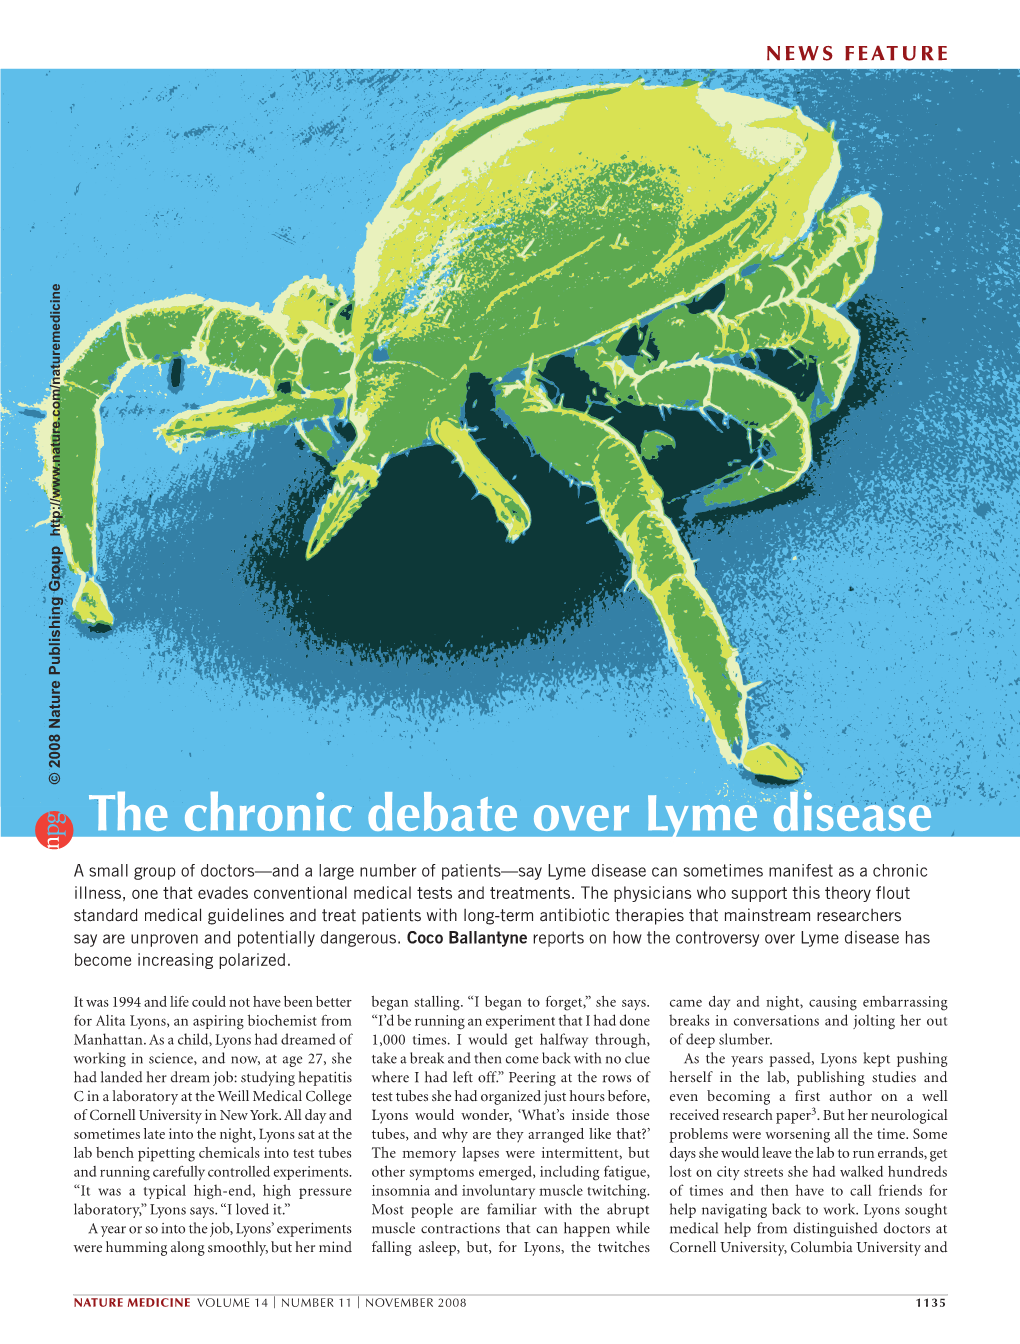 The Chronic Debate Over Lyme Disease